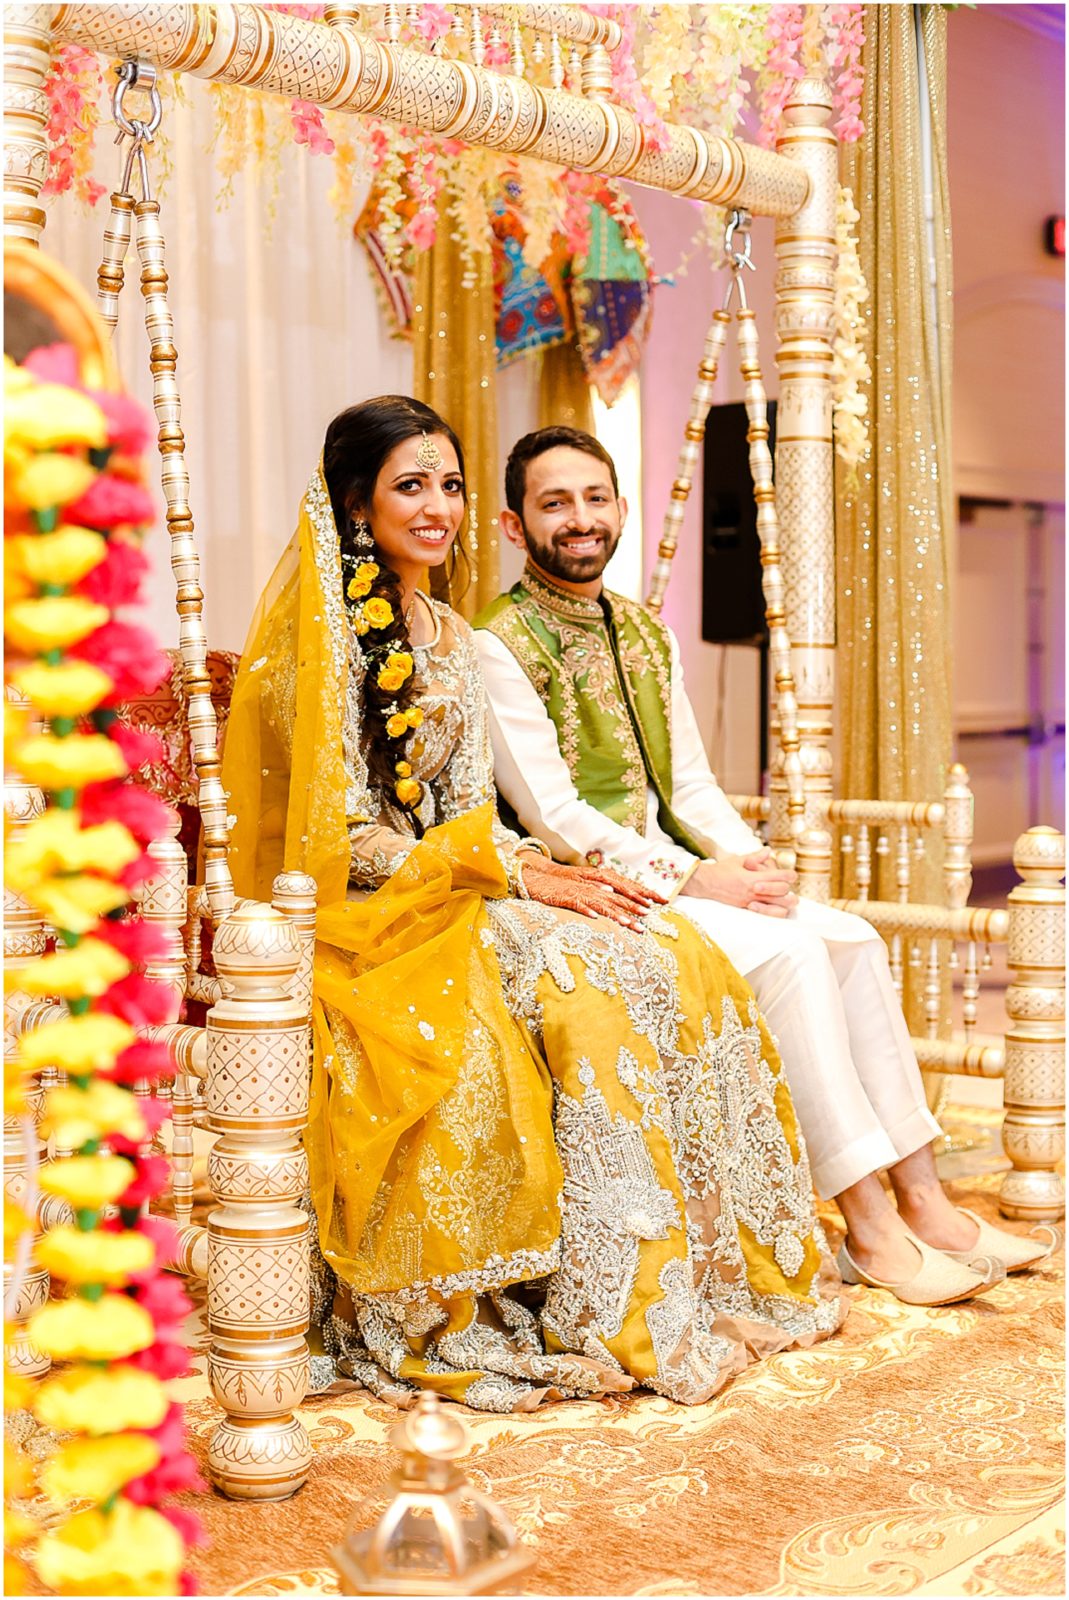 Hyatt Regency St.Louis at the Arch - fatima designs - wedding decorations indian pakistani wedding